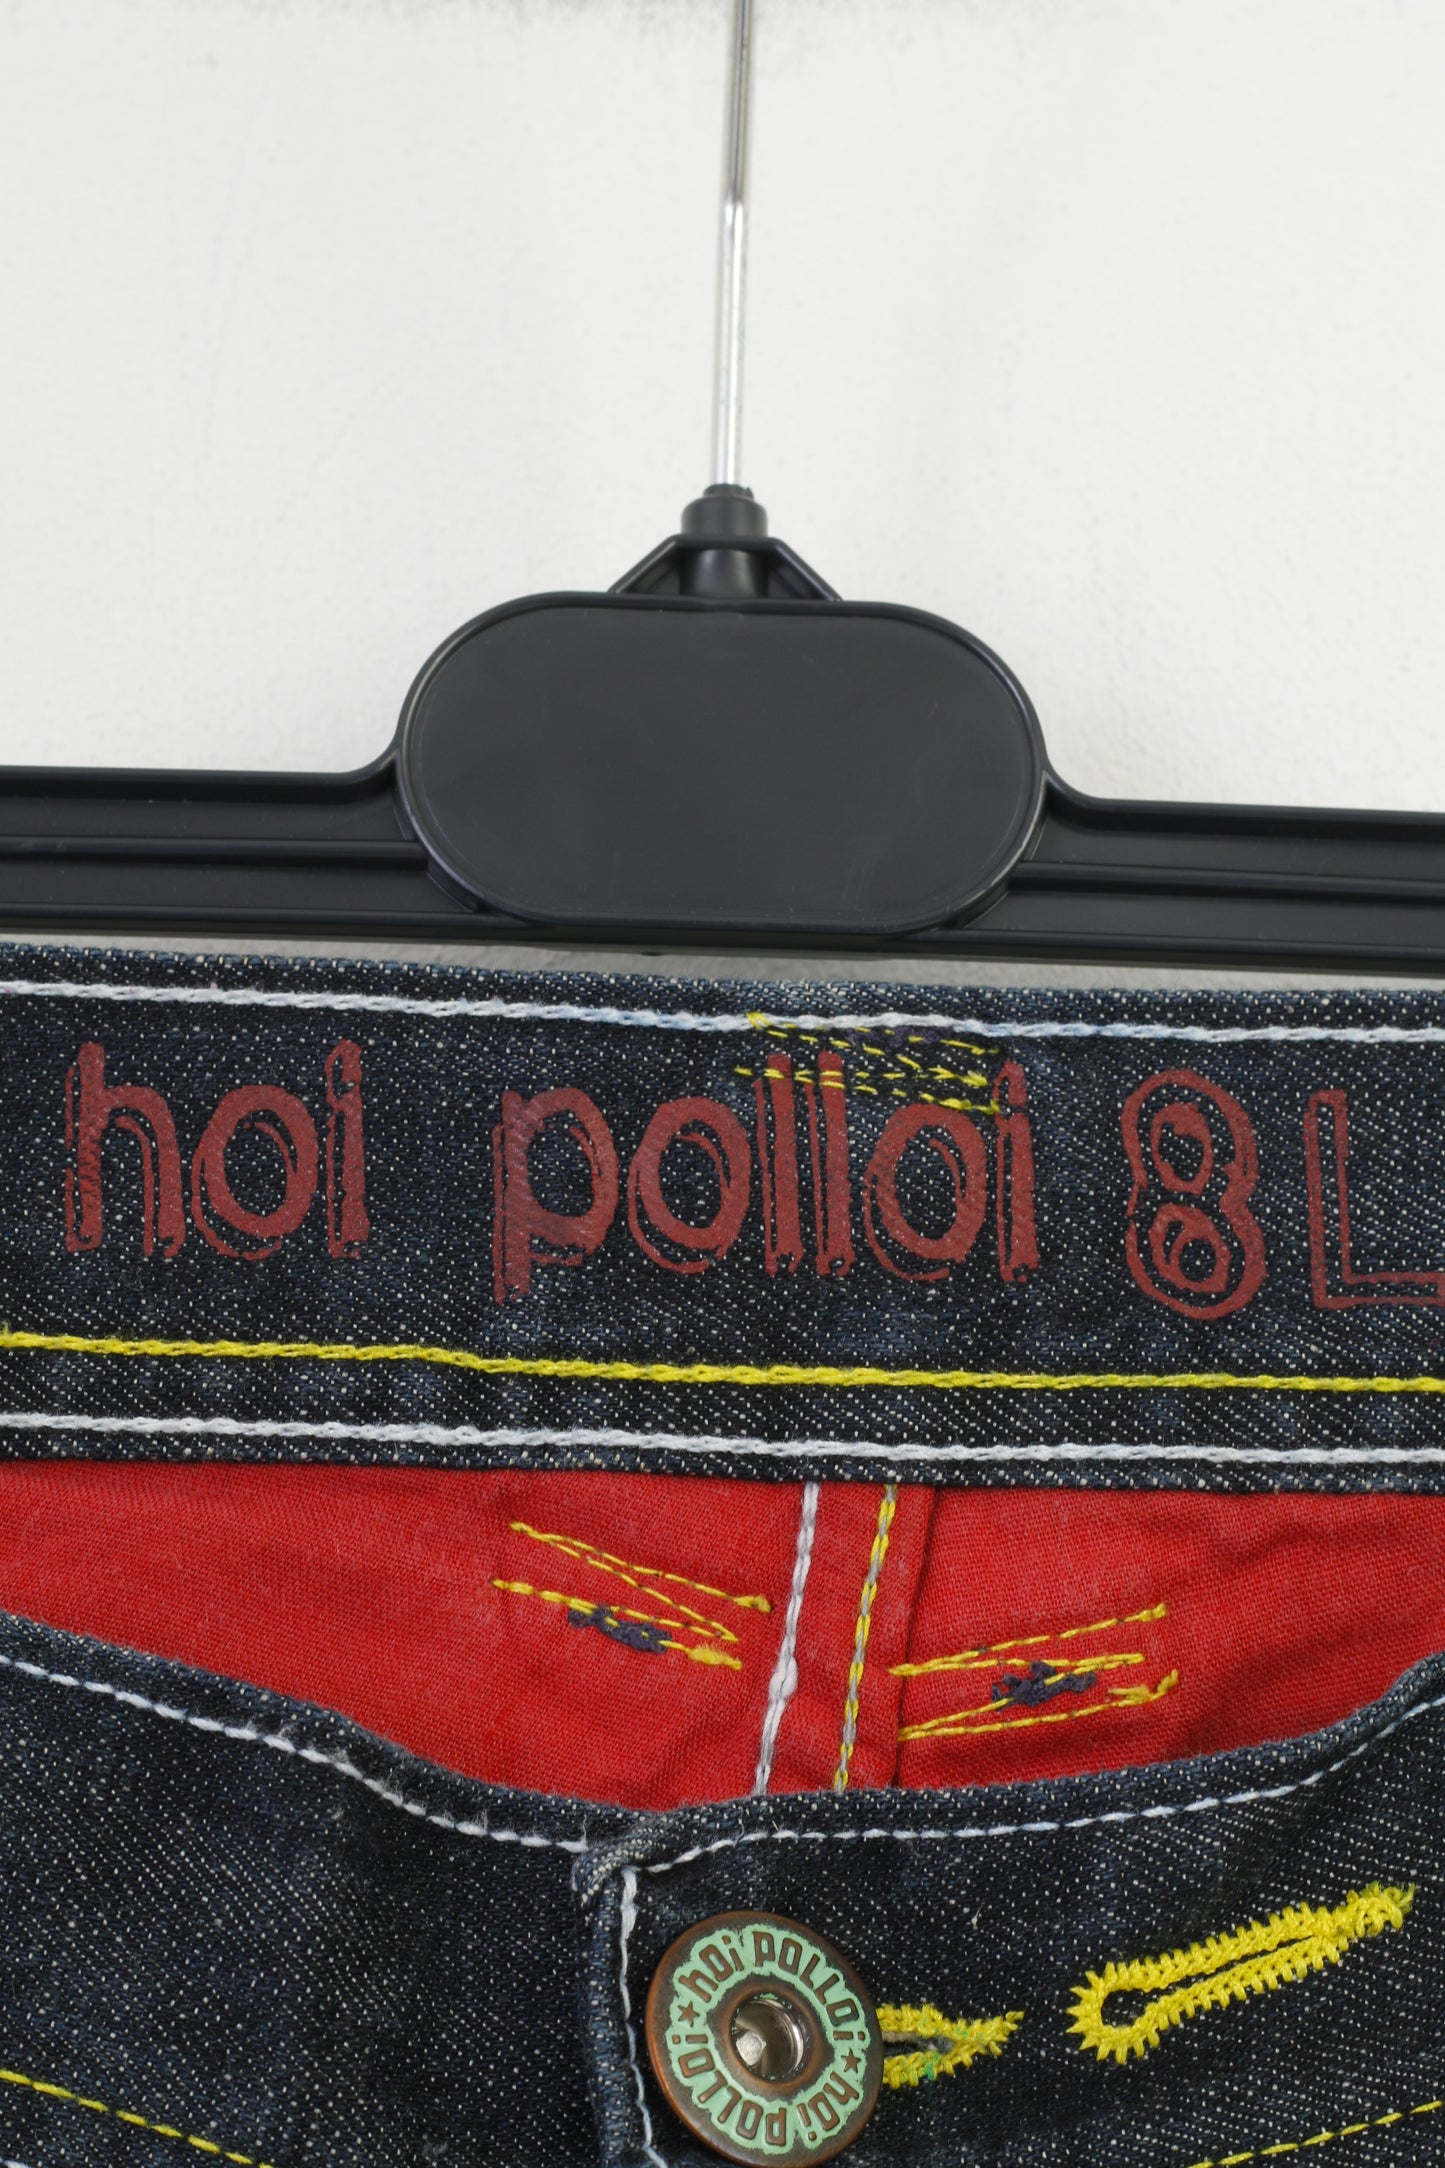 Hoi Polloi Hommes 8 Jeans Pantalons Marine Coton Vintage Poches Pantalon Zippé 